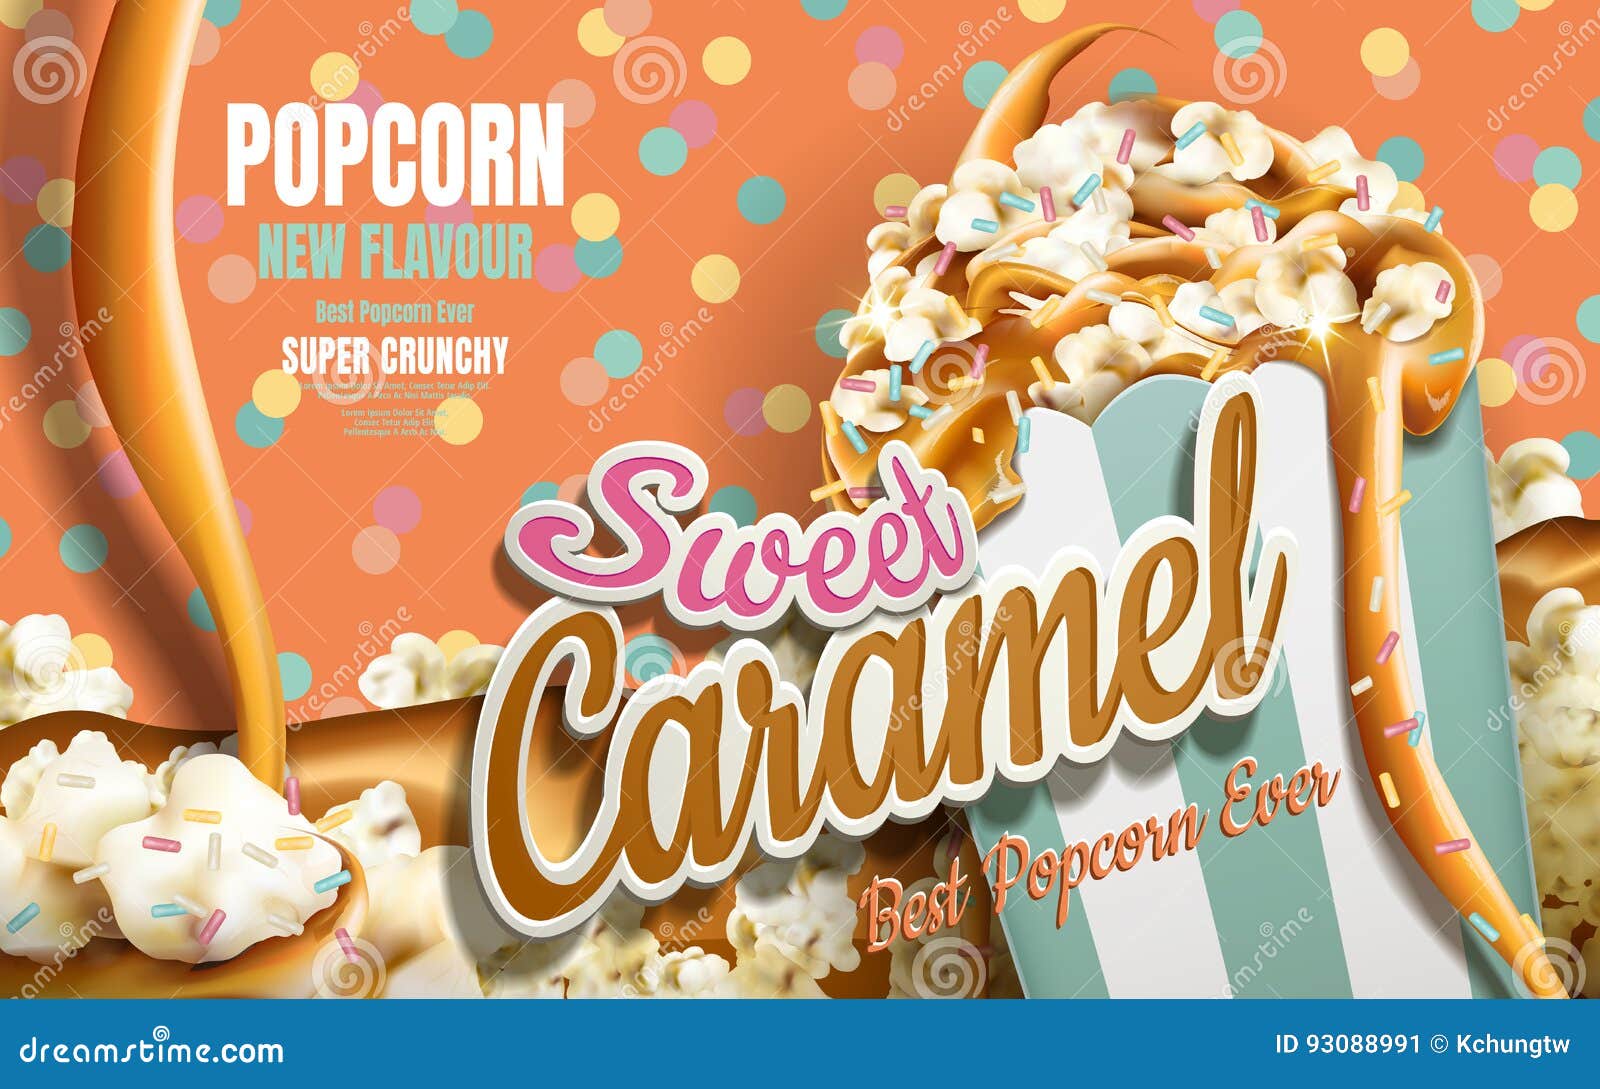 caramel popcorn ads